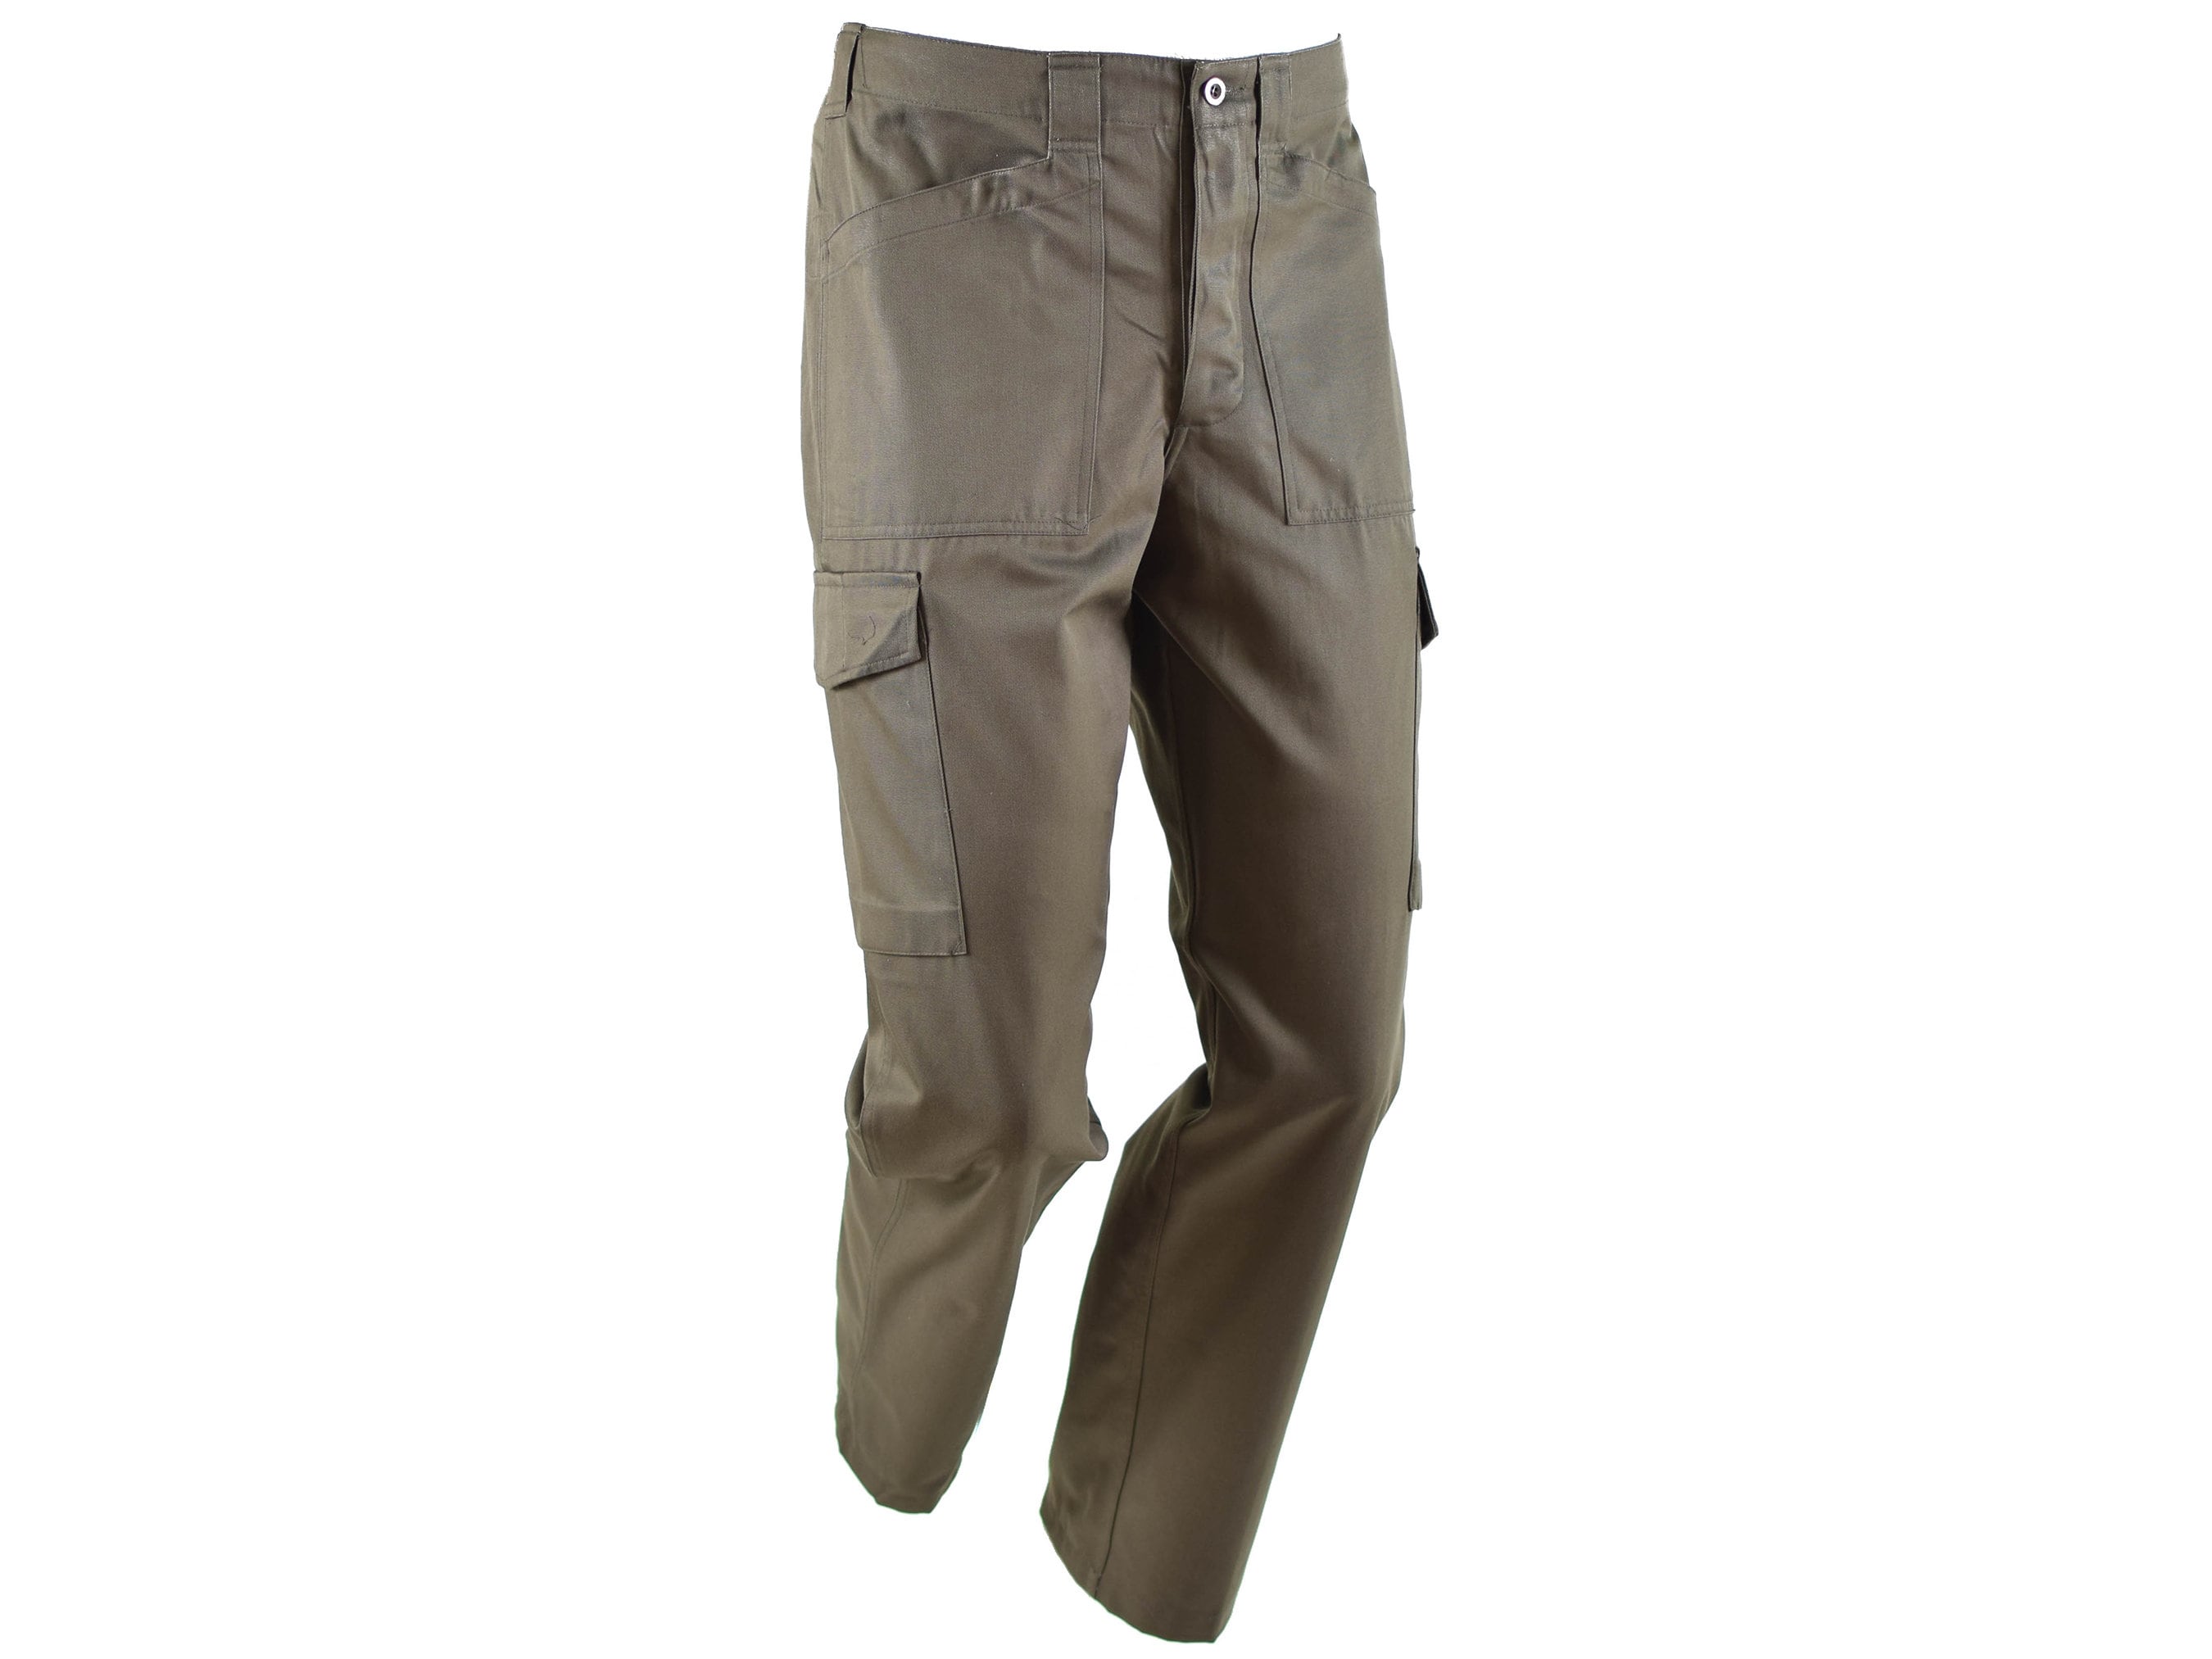 Camouflage Military Boys Cargo Pants For Teenage Boys Big Size 4 14 Yrs  LJ201127276m From Gcffu, $35.18 | DHgate.Com